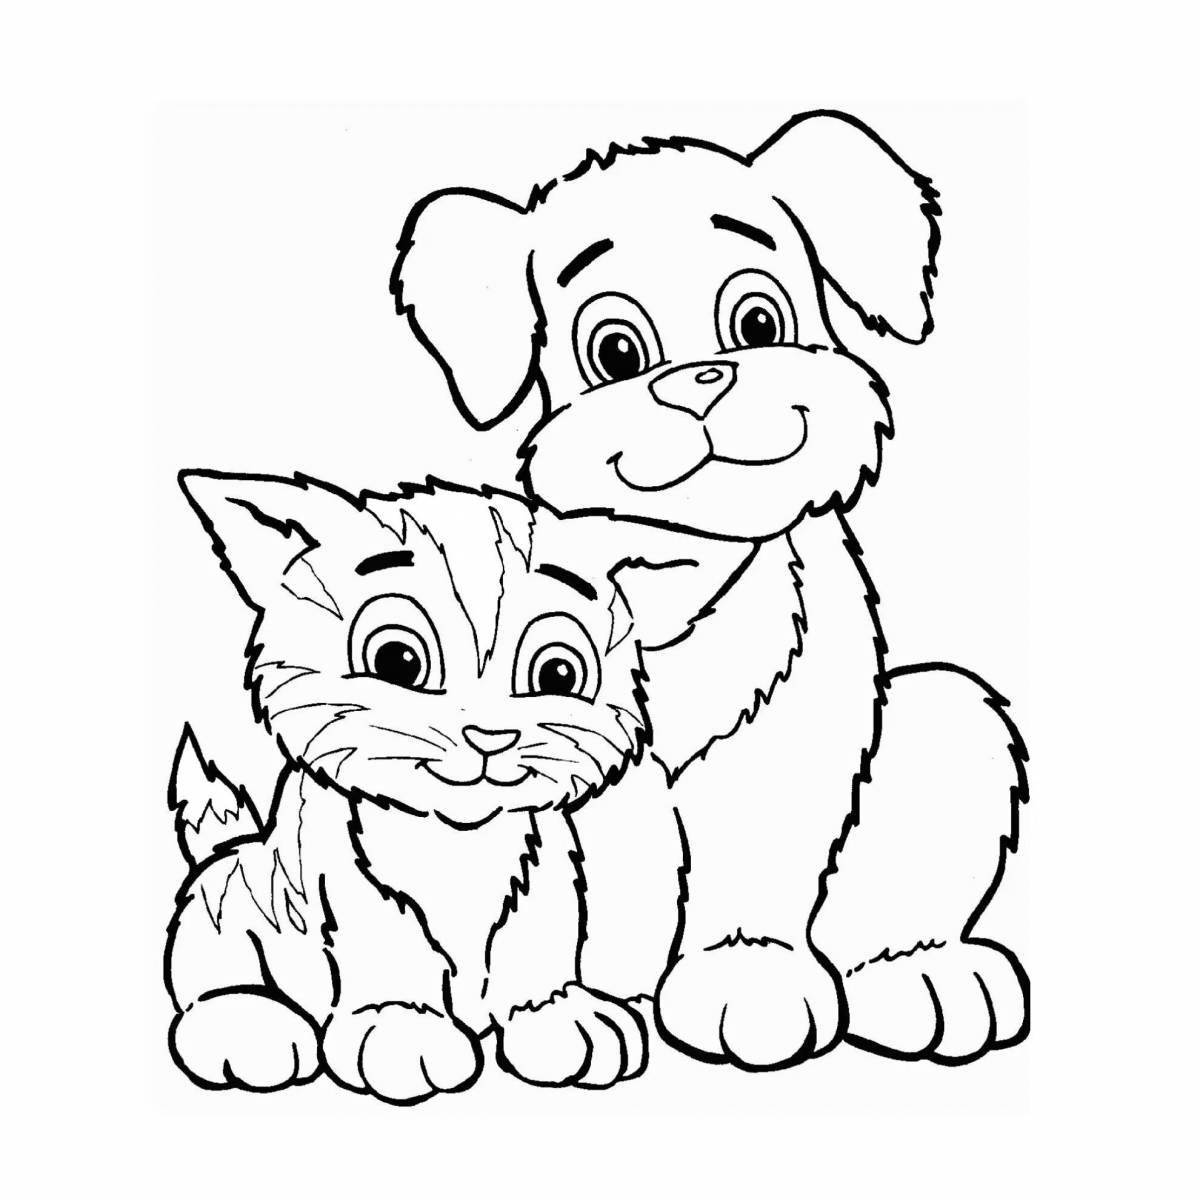 Раскраска безмятежная кошка и собака вместе